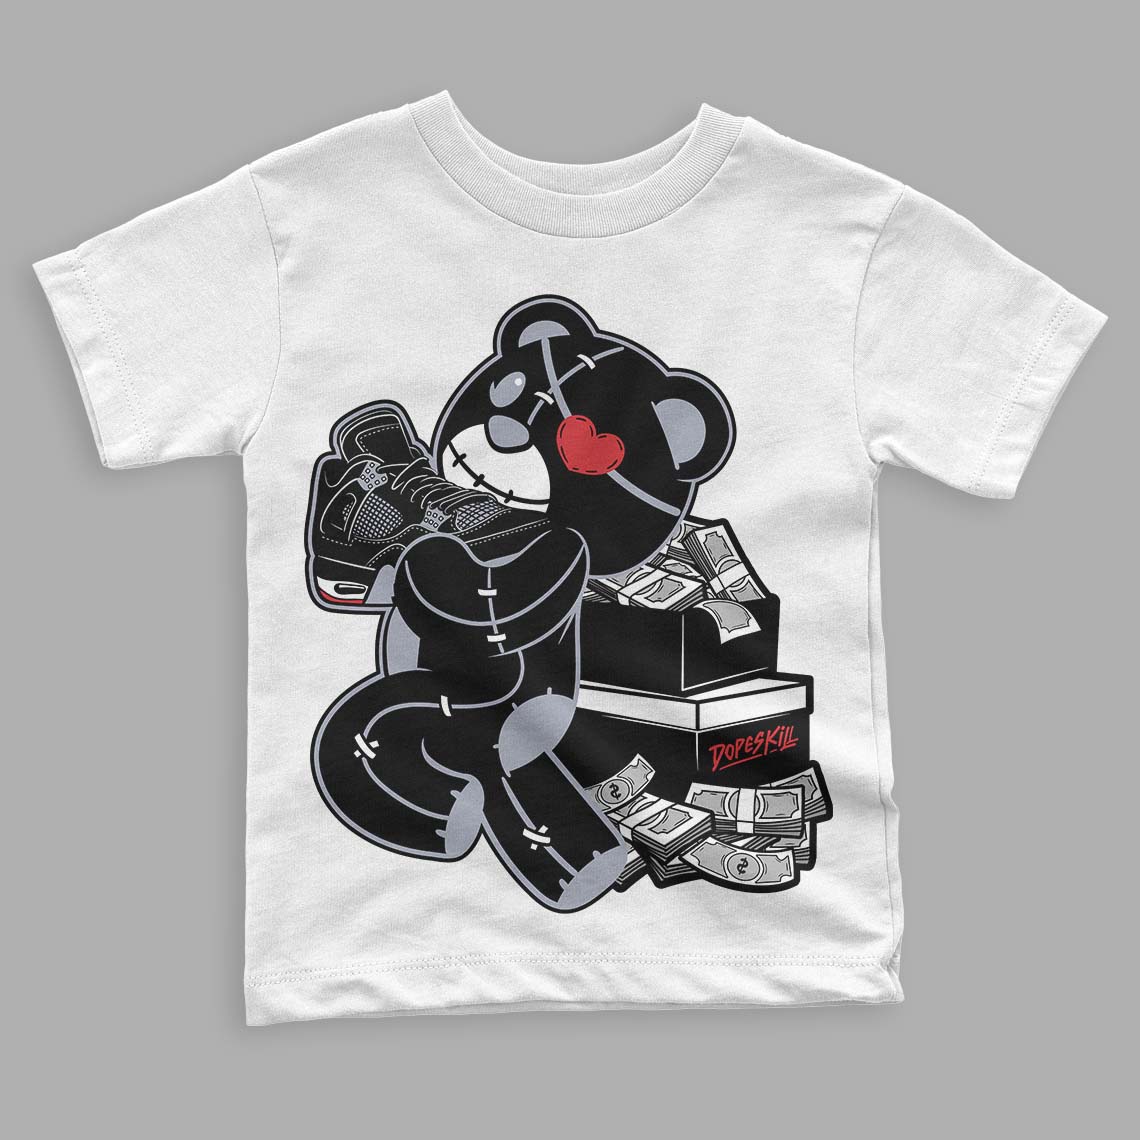 Jordan 4 “Bred Reimagined” DopeSkill Toddler Kids T-shirt Bear Steals Sneaker Graphic Streetwear - White 